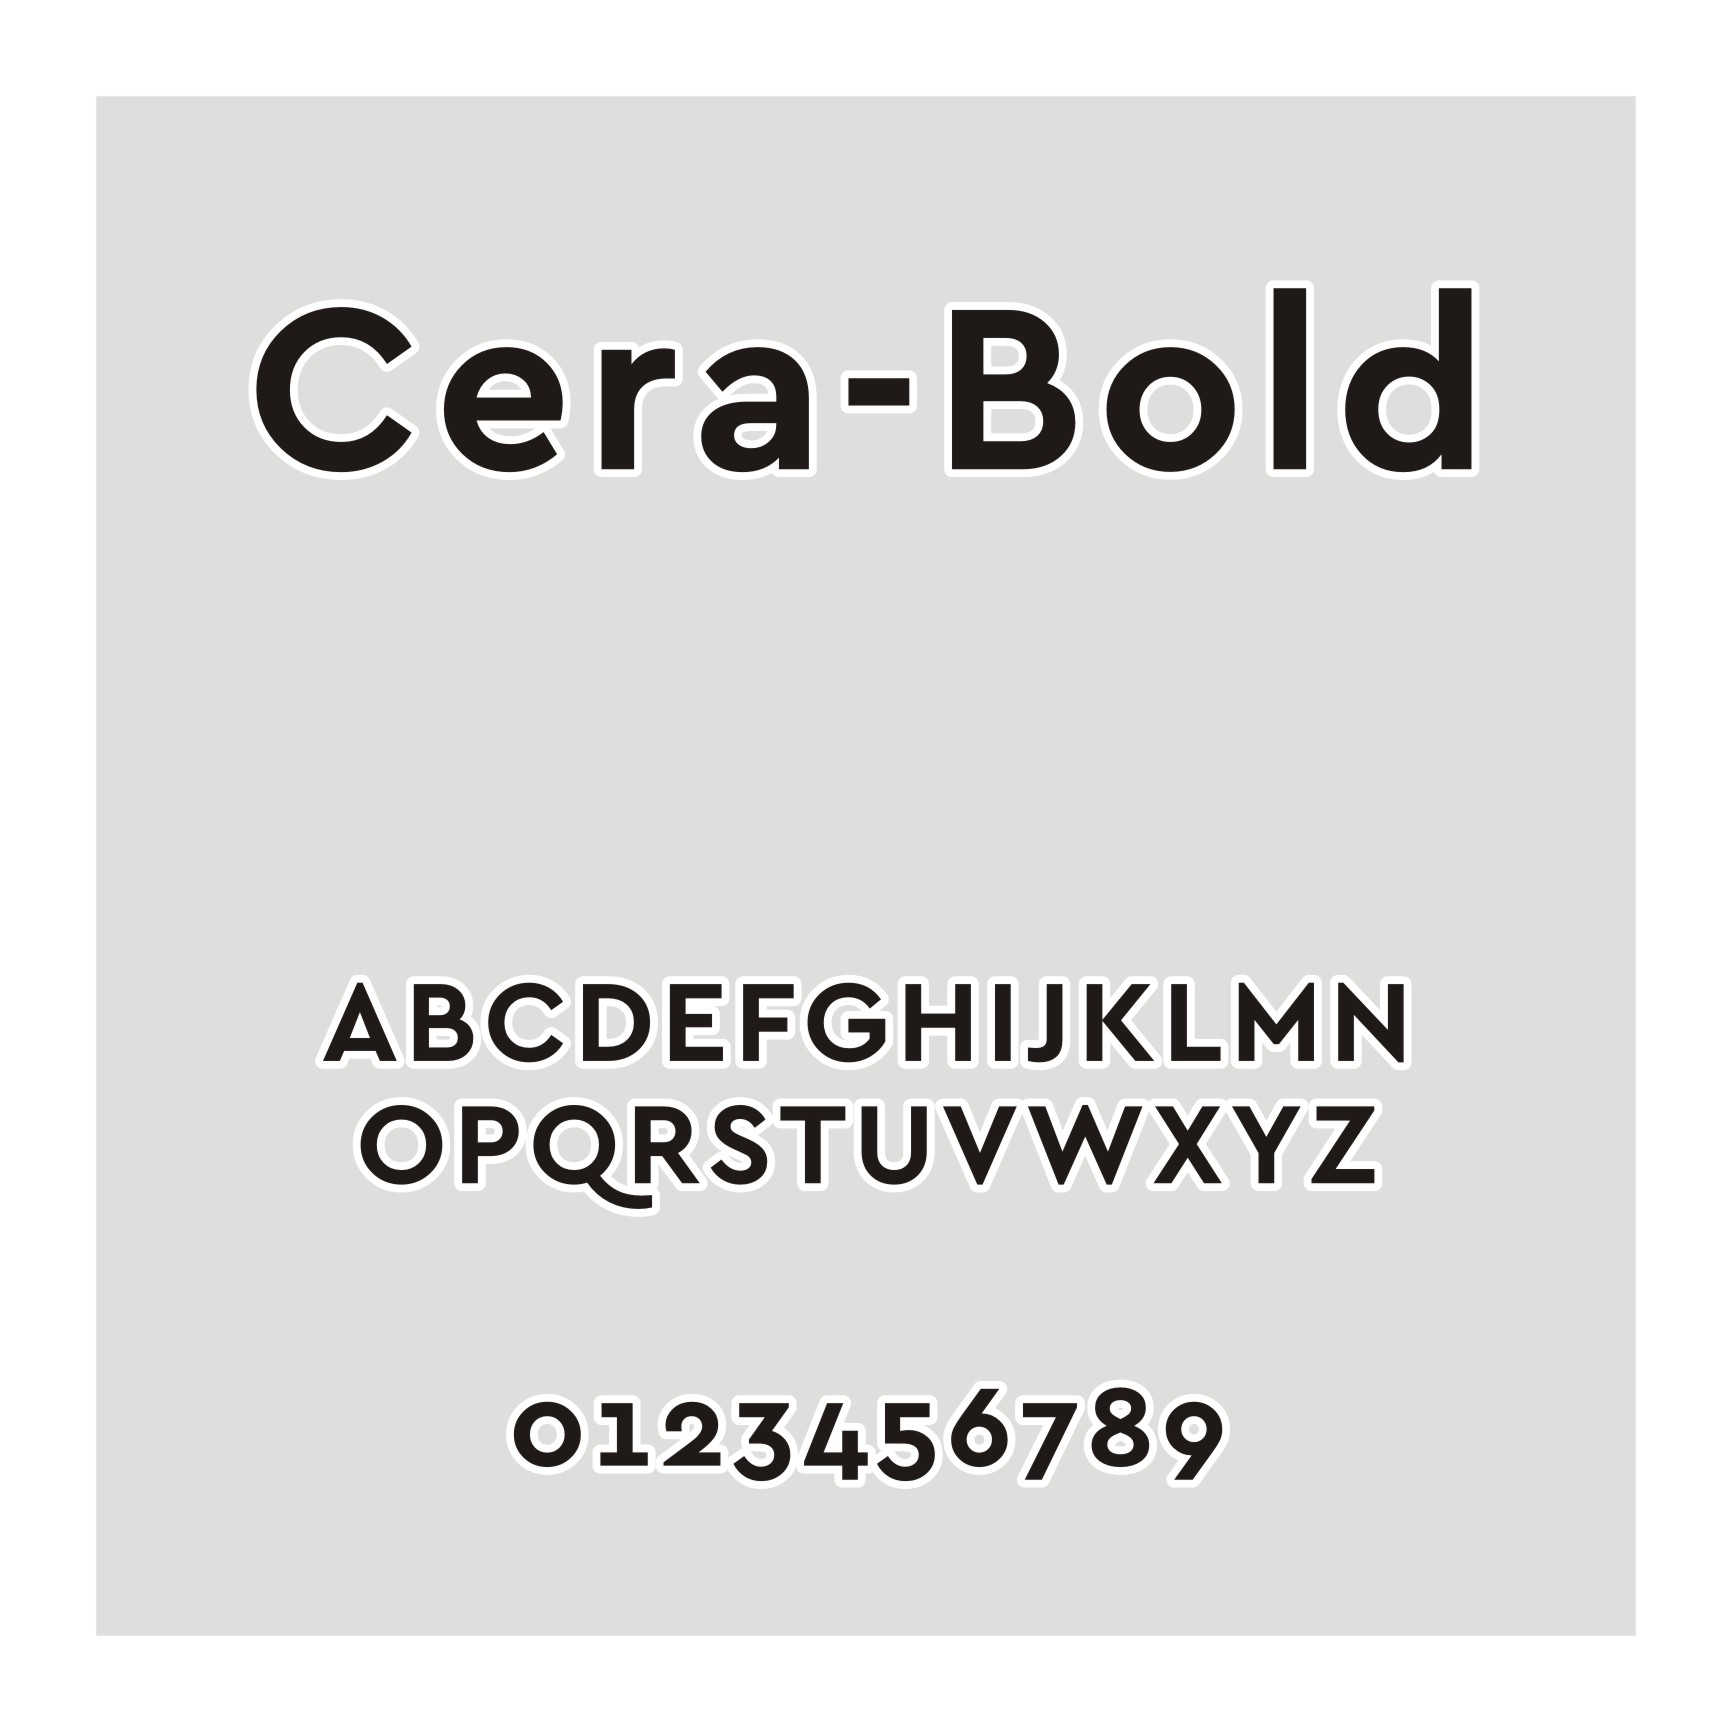 Cera-Bold